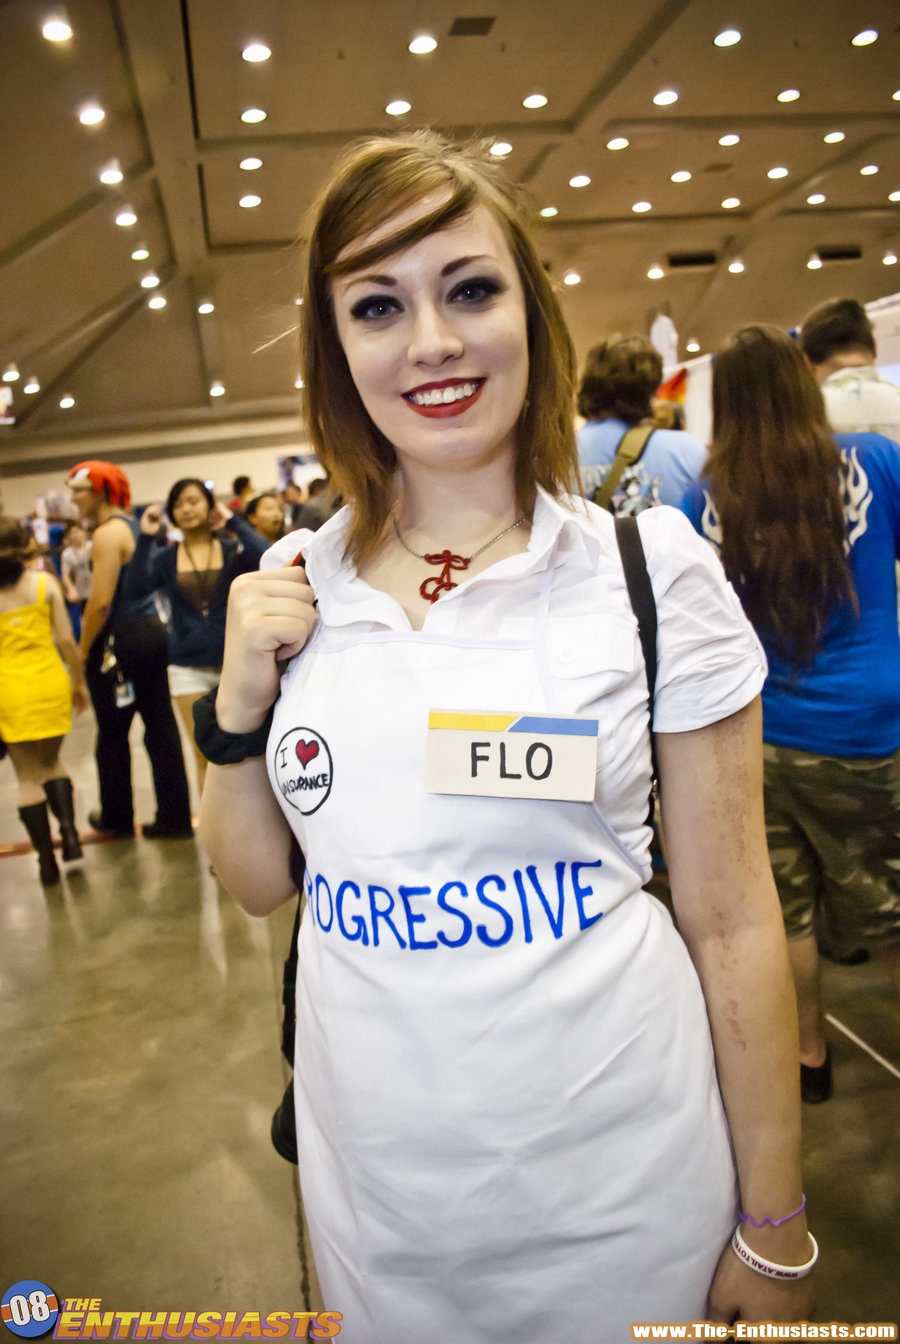 Flo - Progressive Inurance Girl 9-11-2010 35